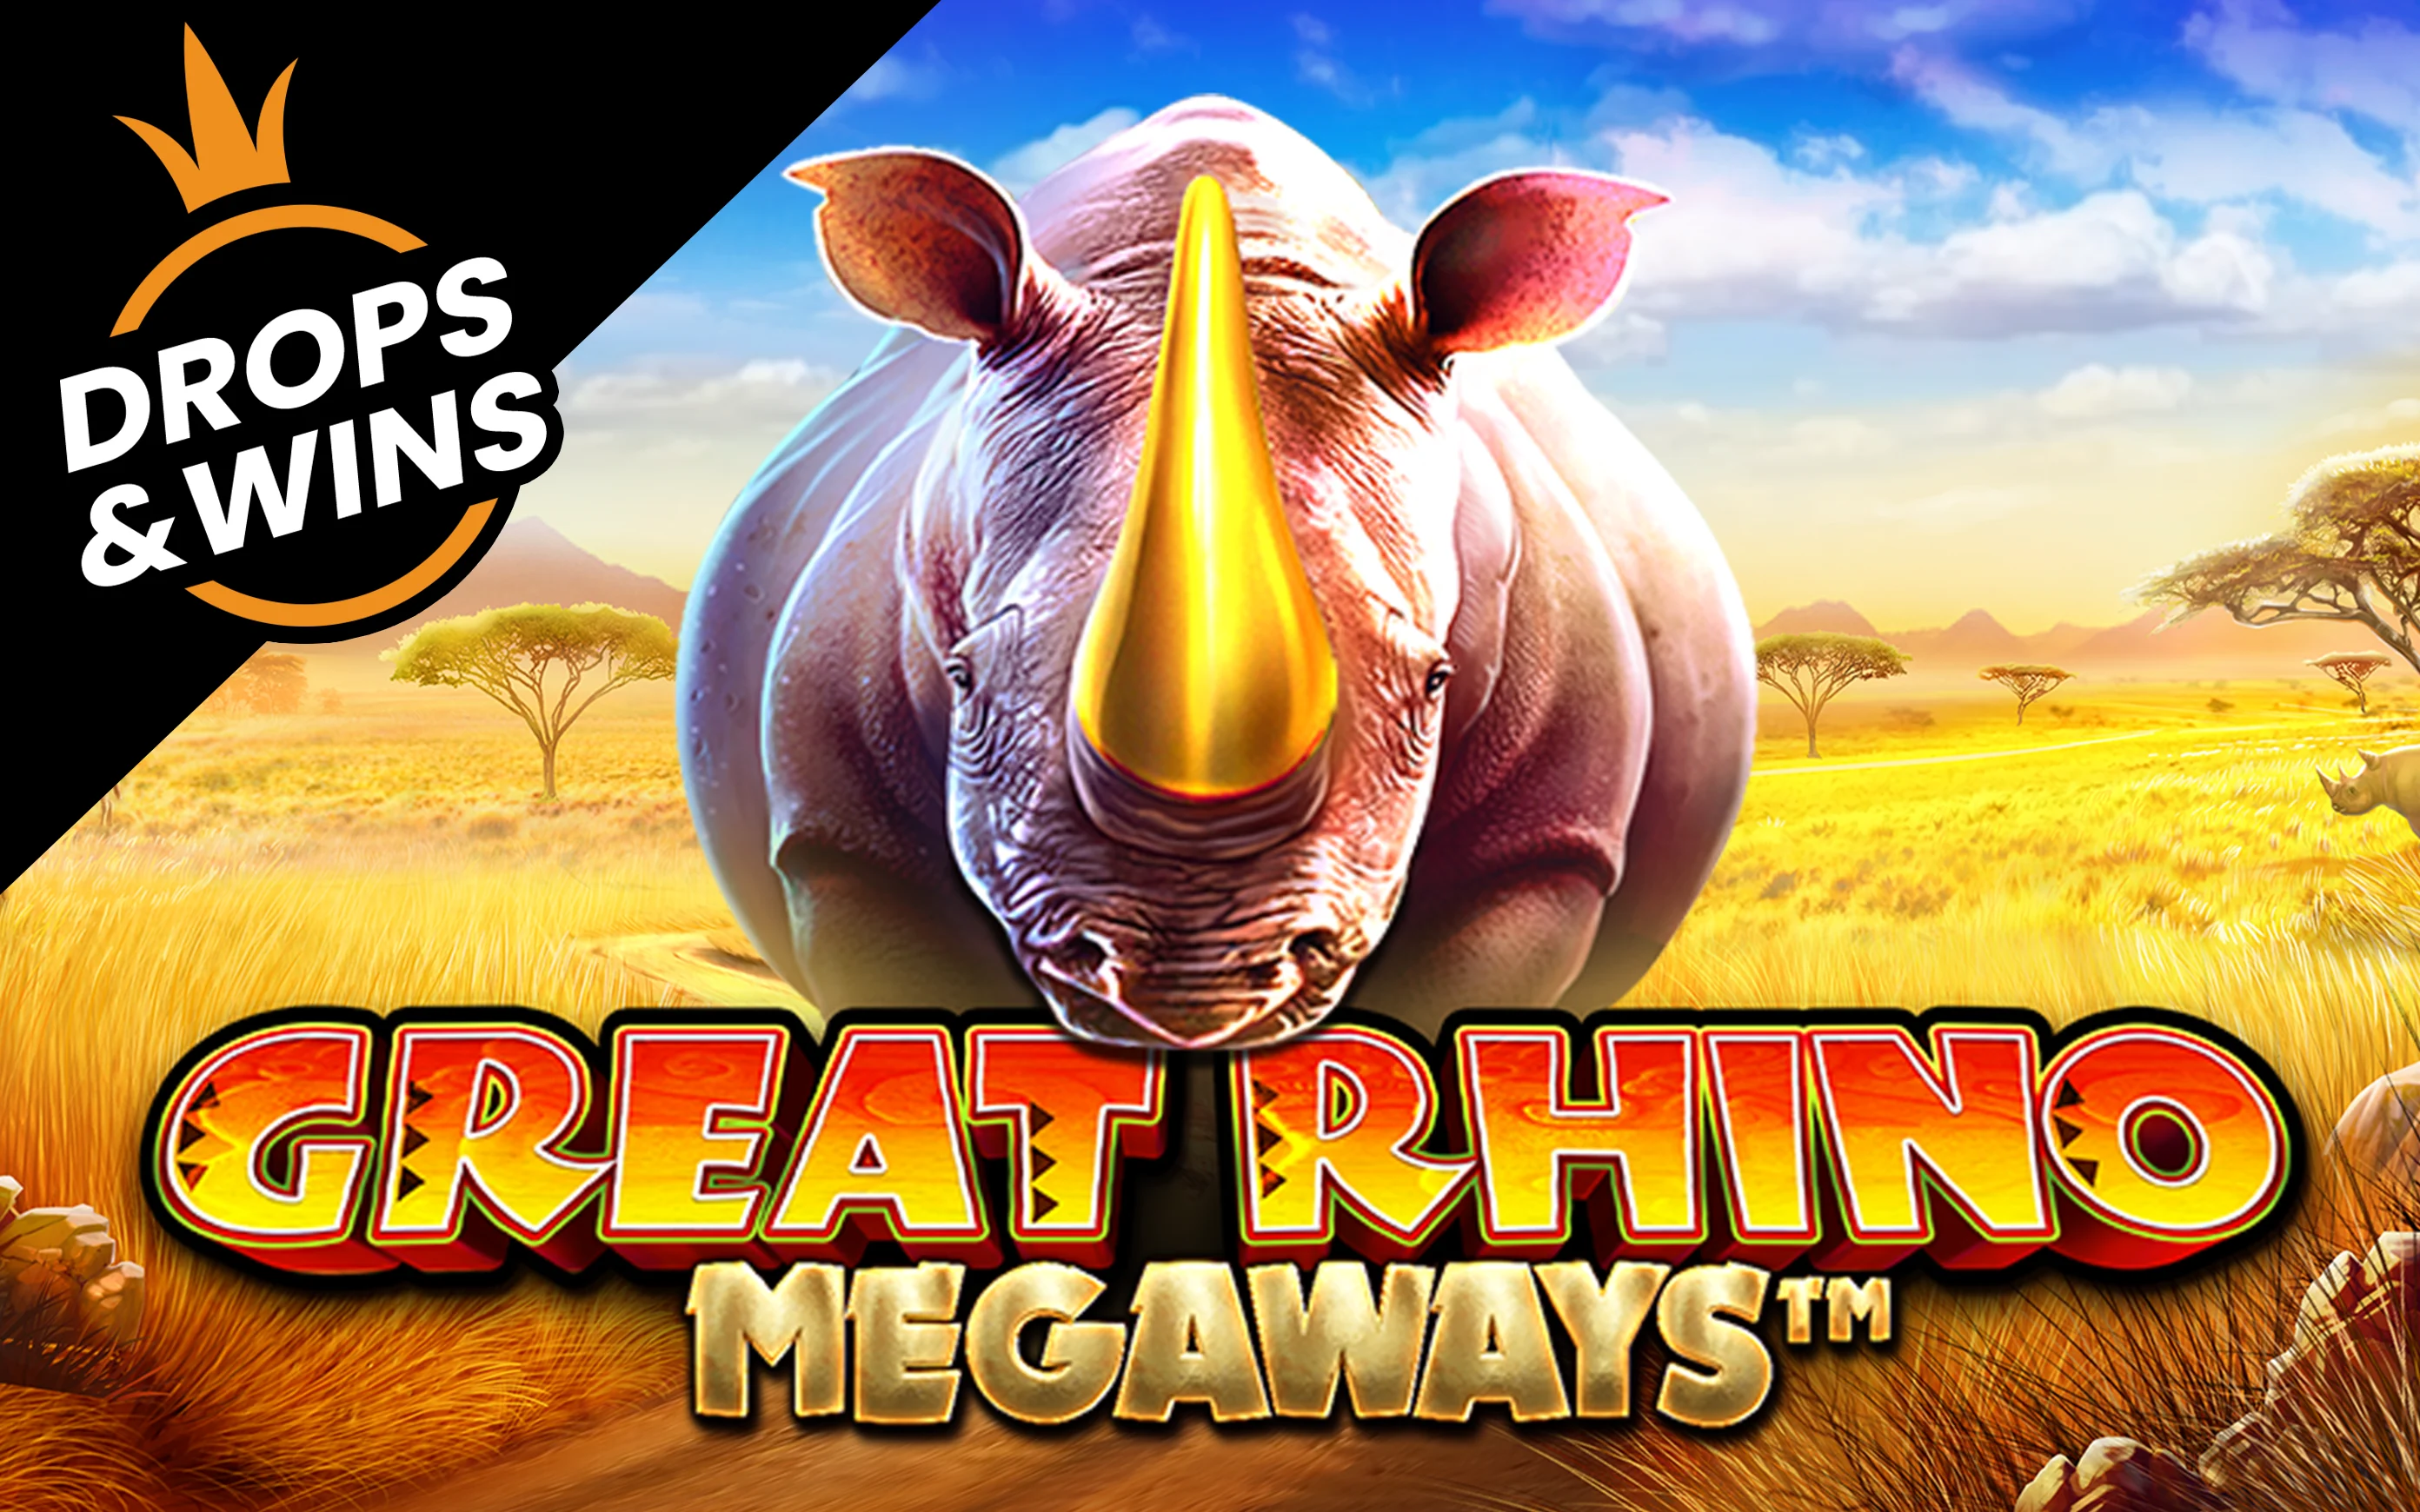 Speel Great Rhino Megaways™ op Starcasino.be online casino